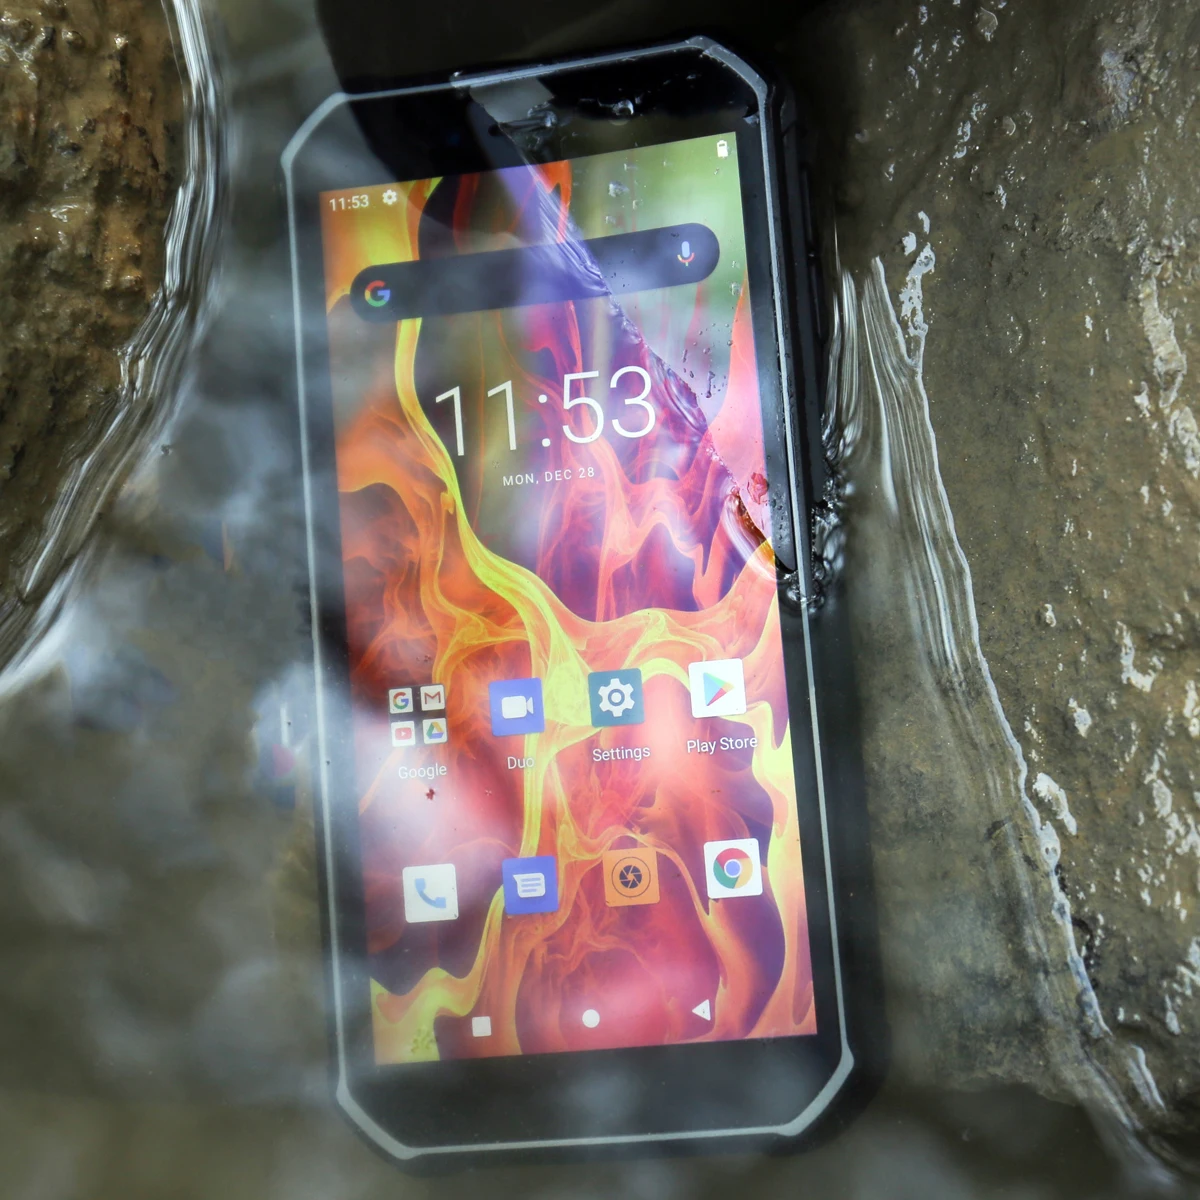 
Phonemax 4g 5.5 inch 5100mAh android mobile phone ip68 waterproof smart 4g rugged phone 